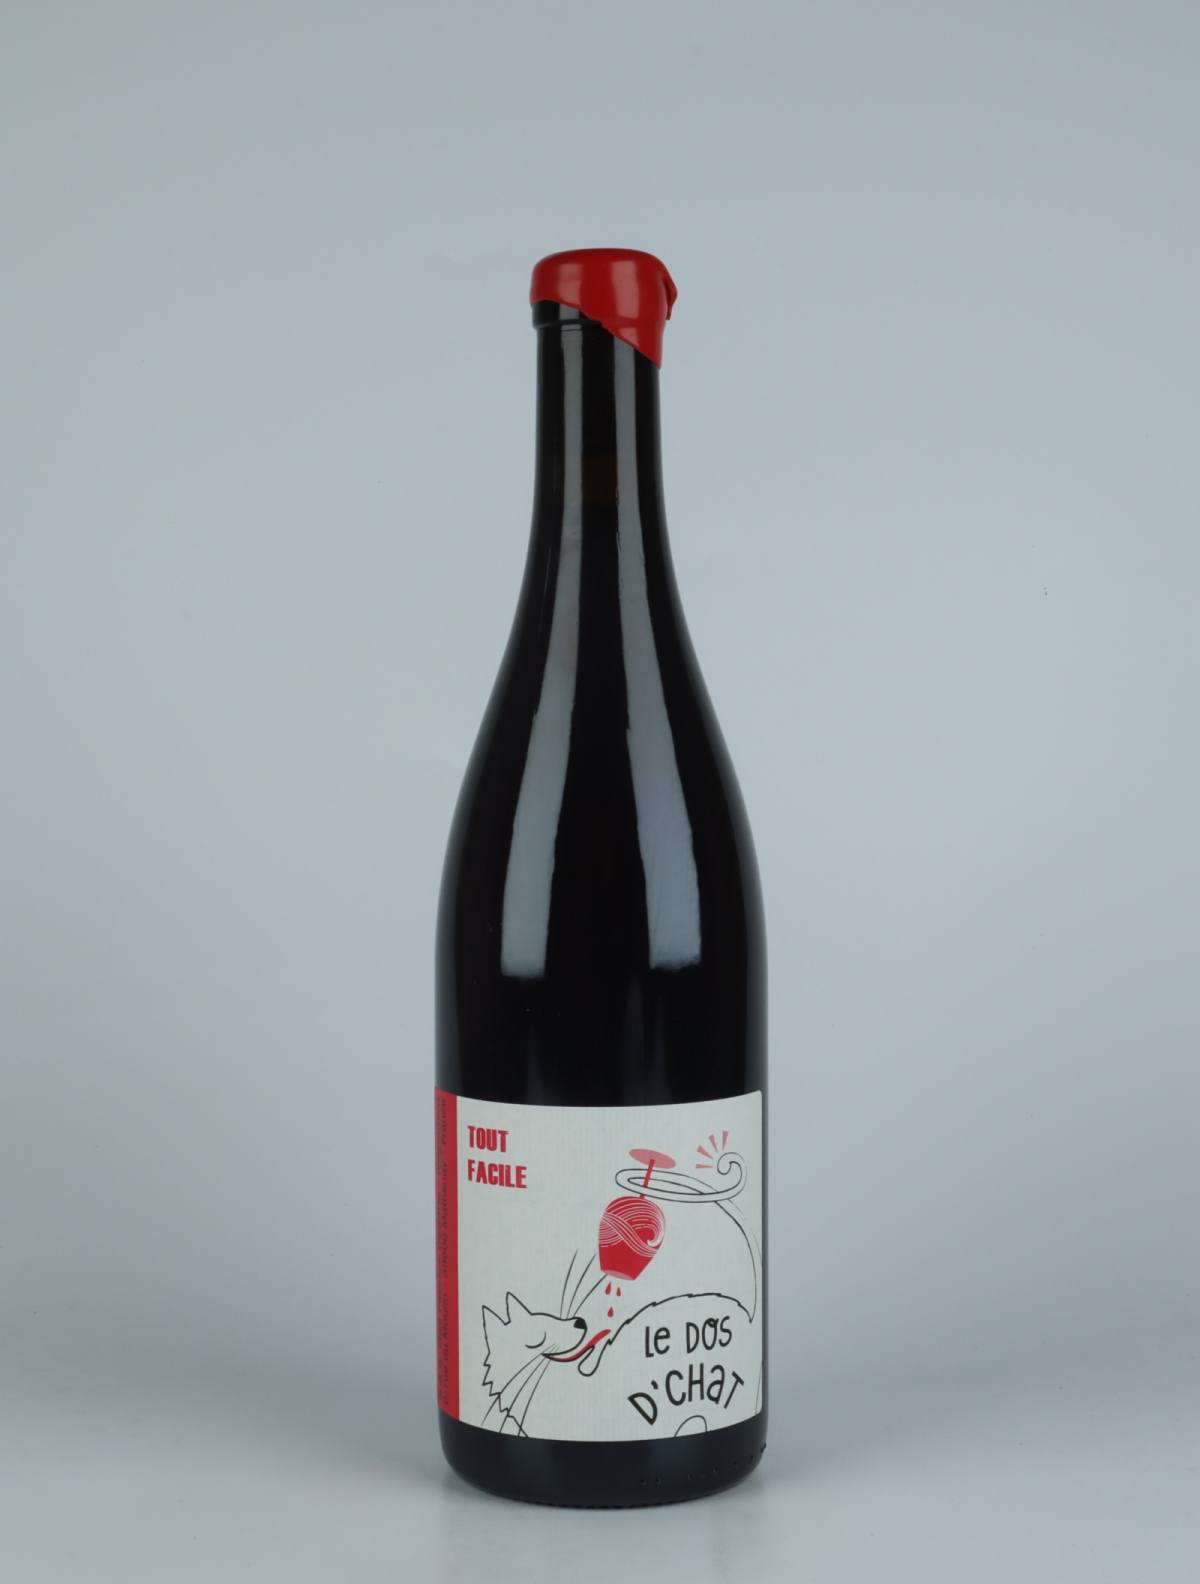 A bottle 2021 Tout Facile Red wine from Fabrice Dodane, Jura in France